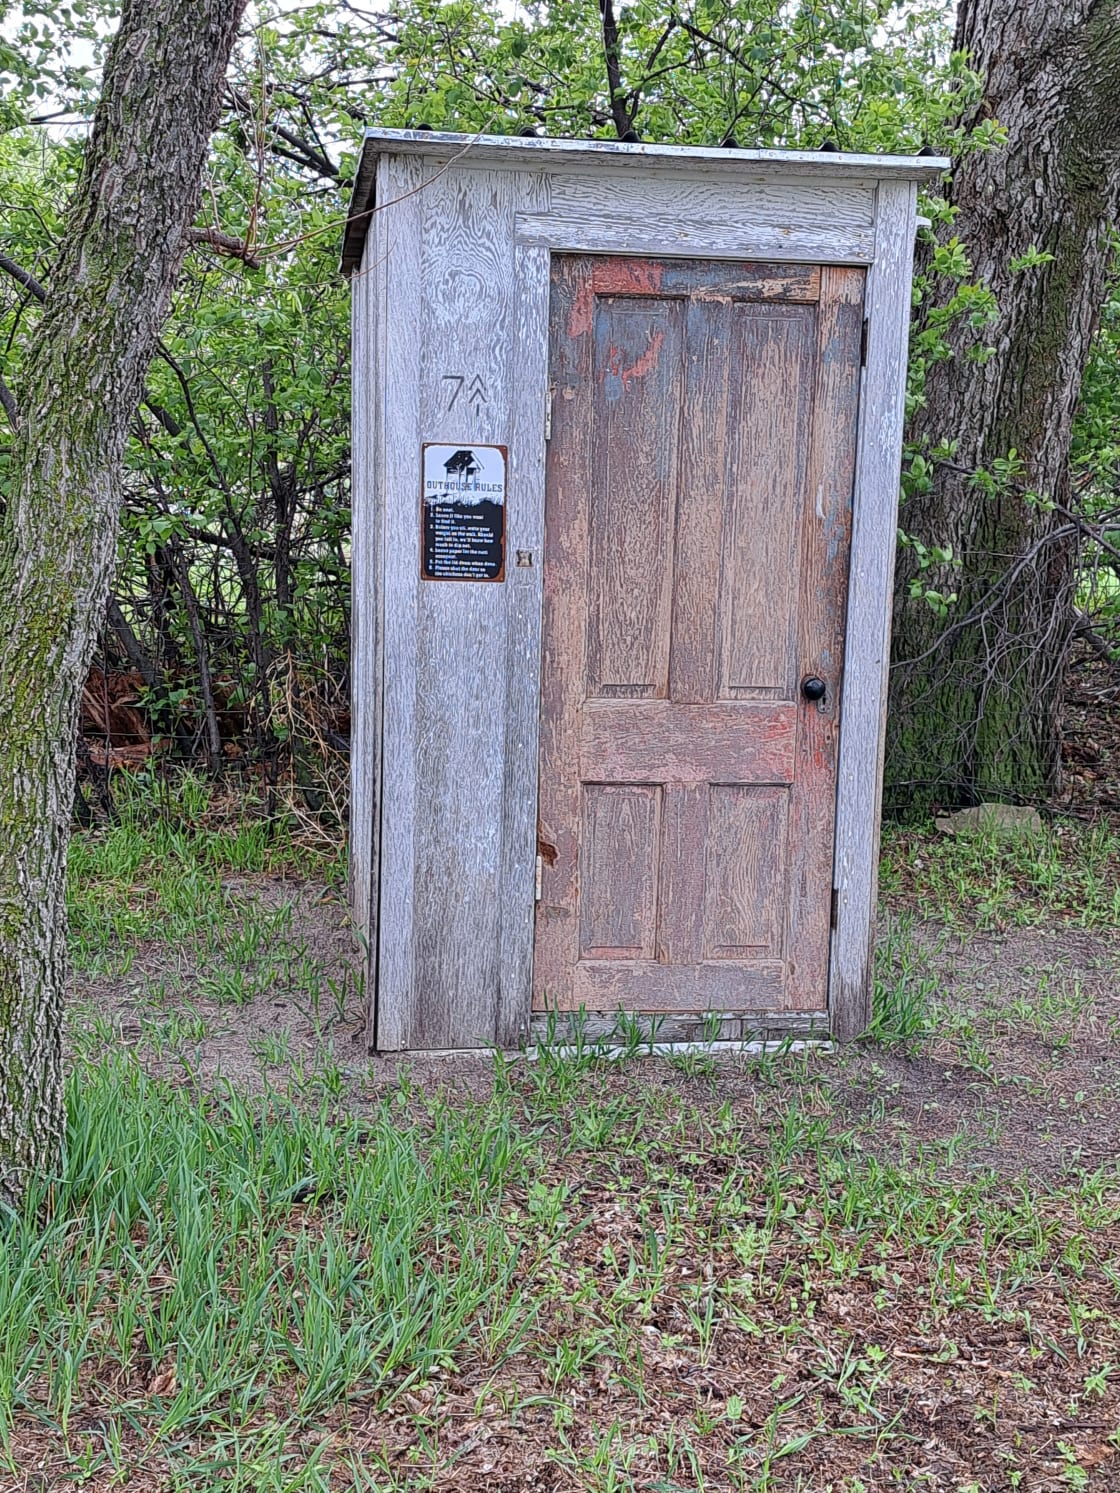 Ye ole outhouse, no plastic porta-potty here